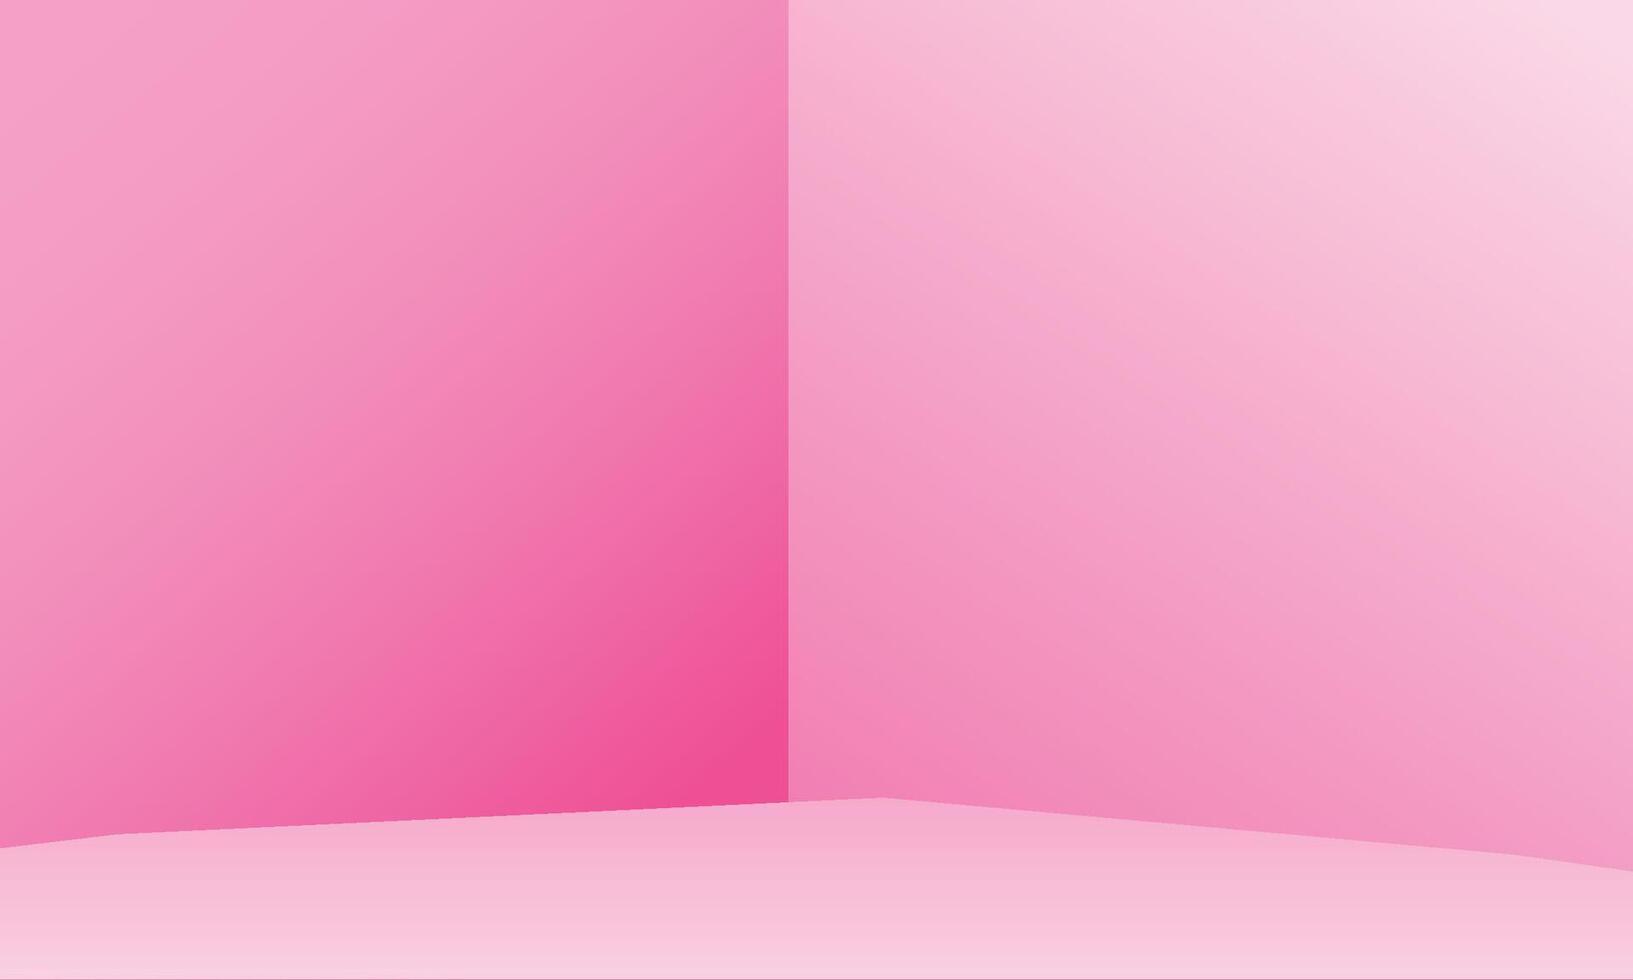 minimal interior studio light for product presentation on pink background vector